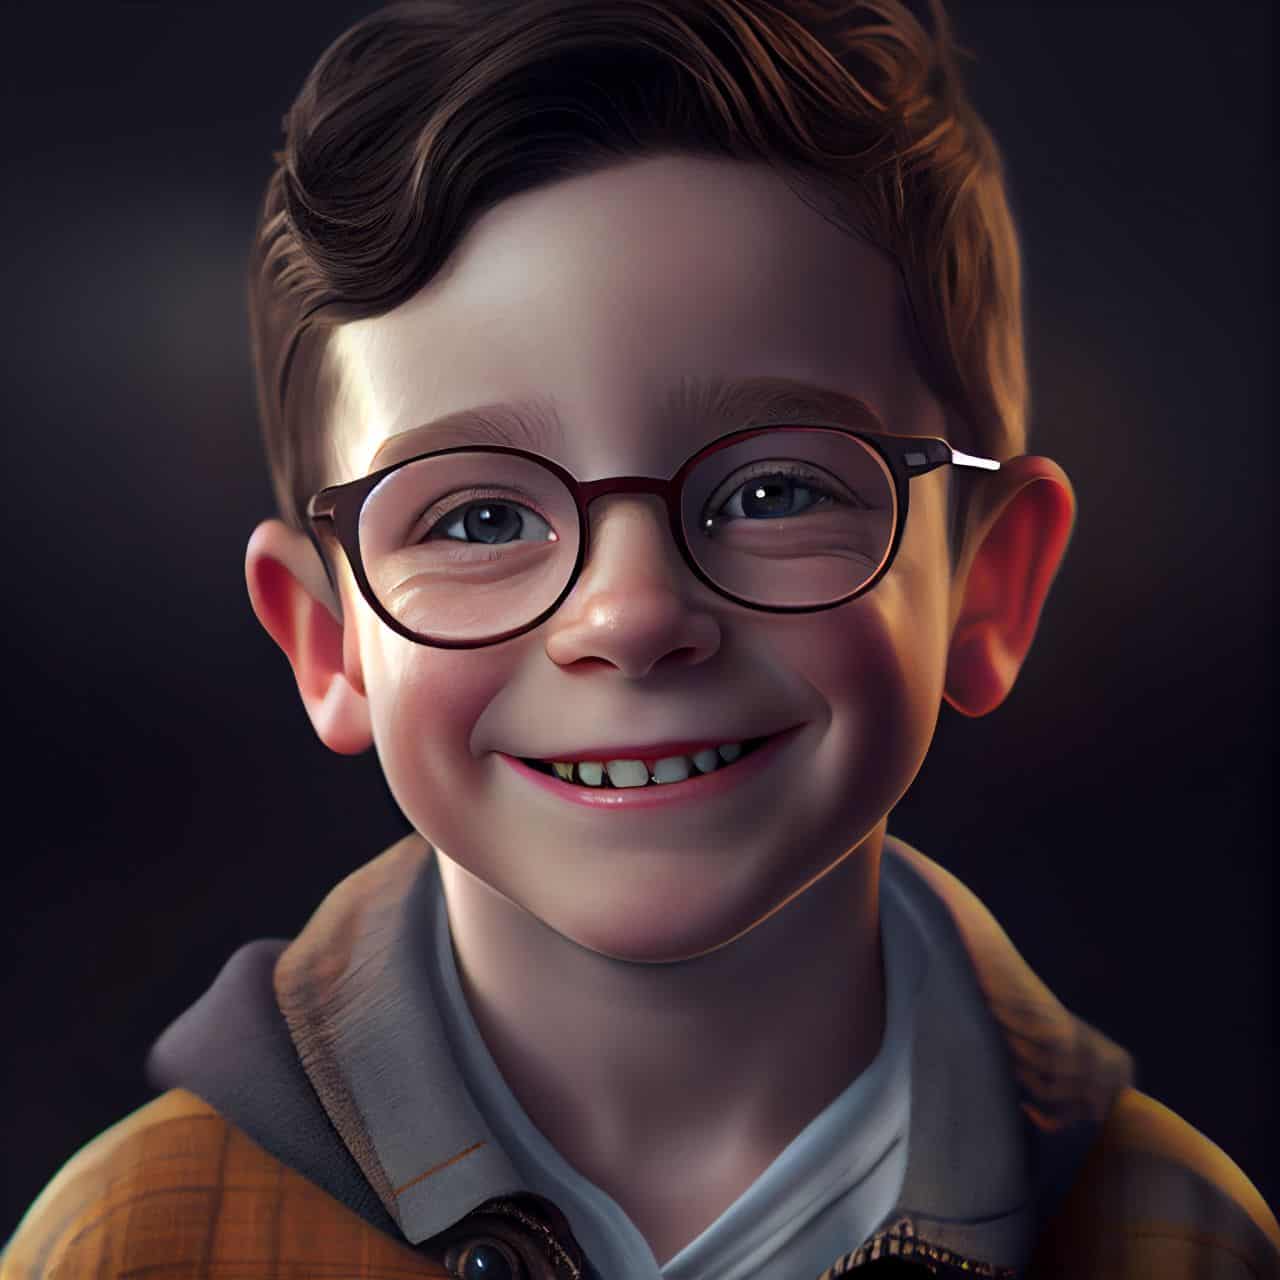 nerd kid smiling